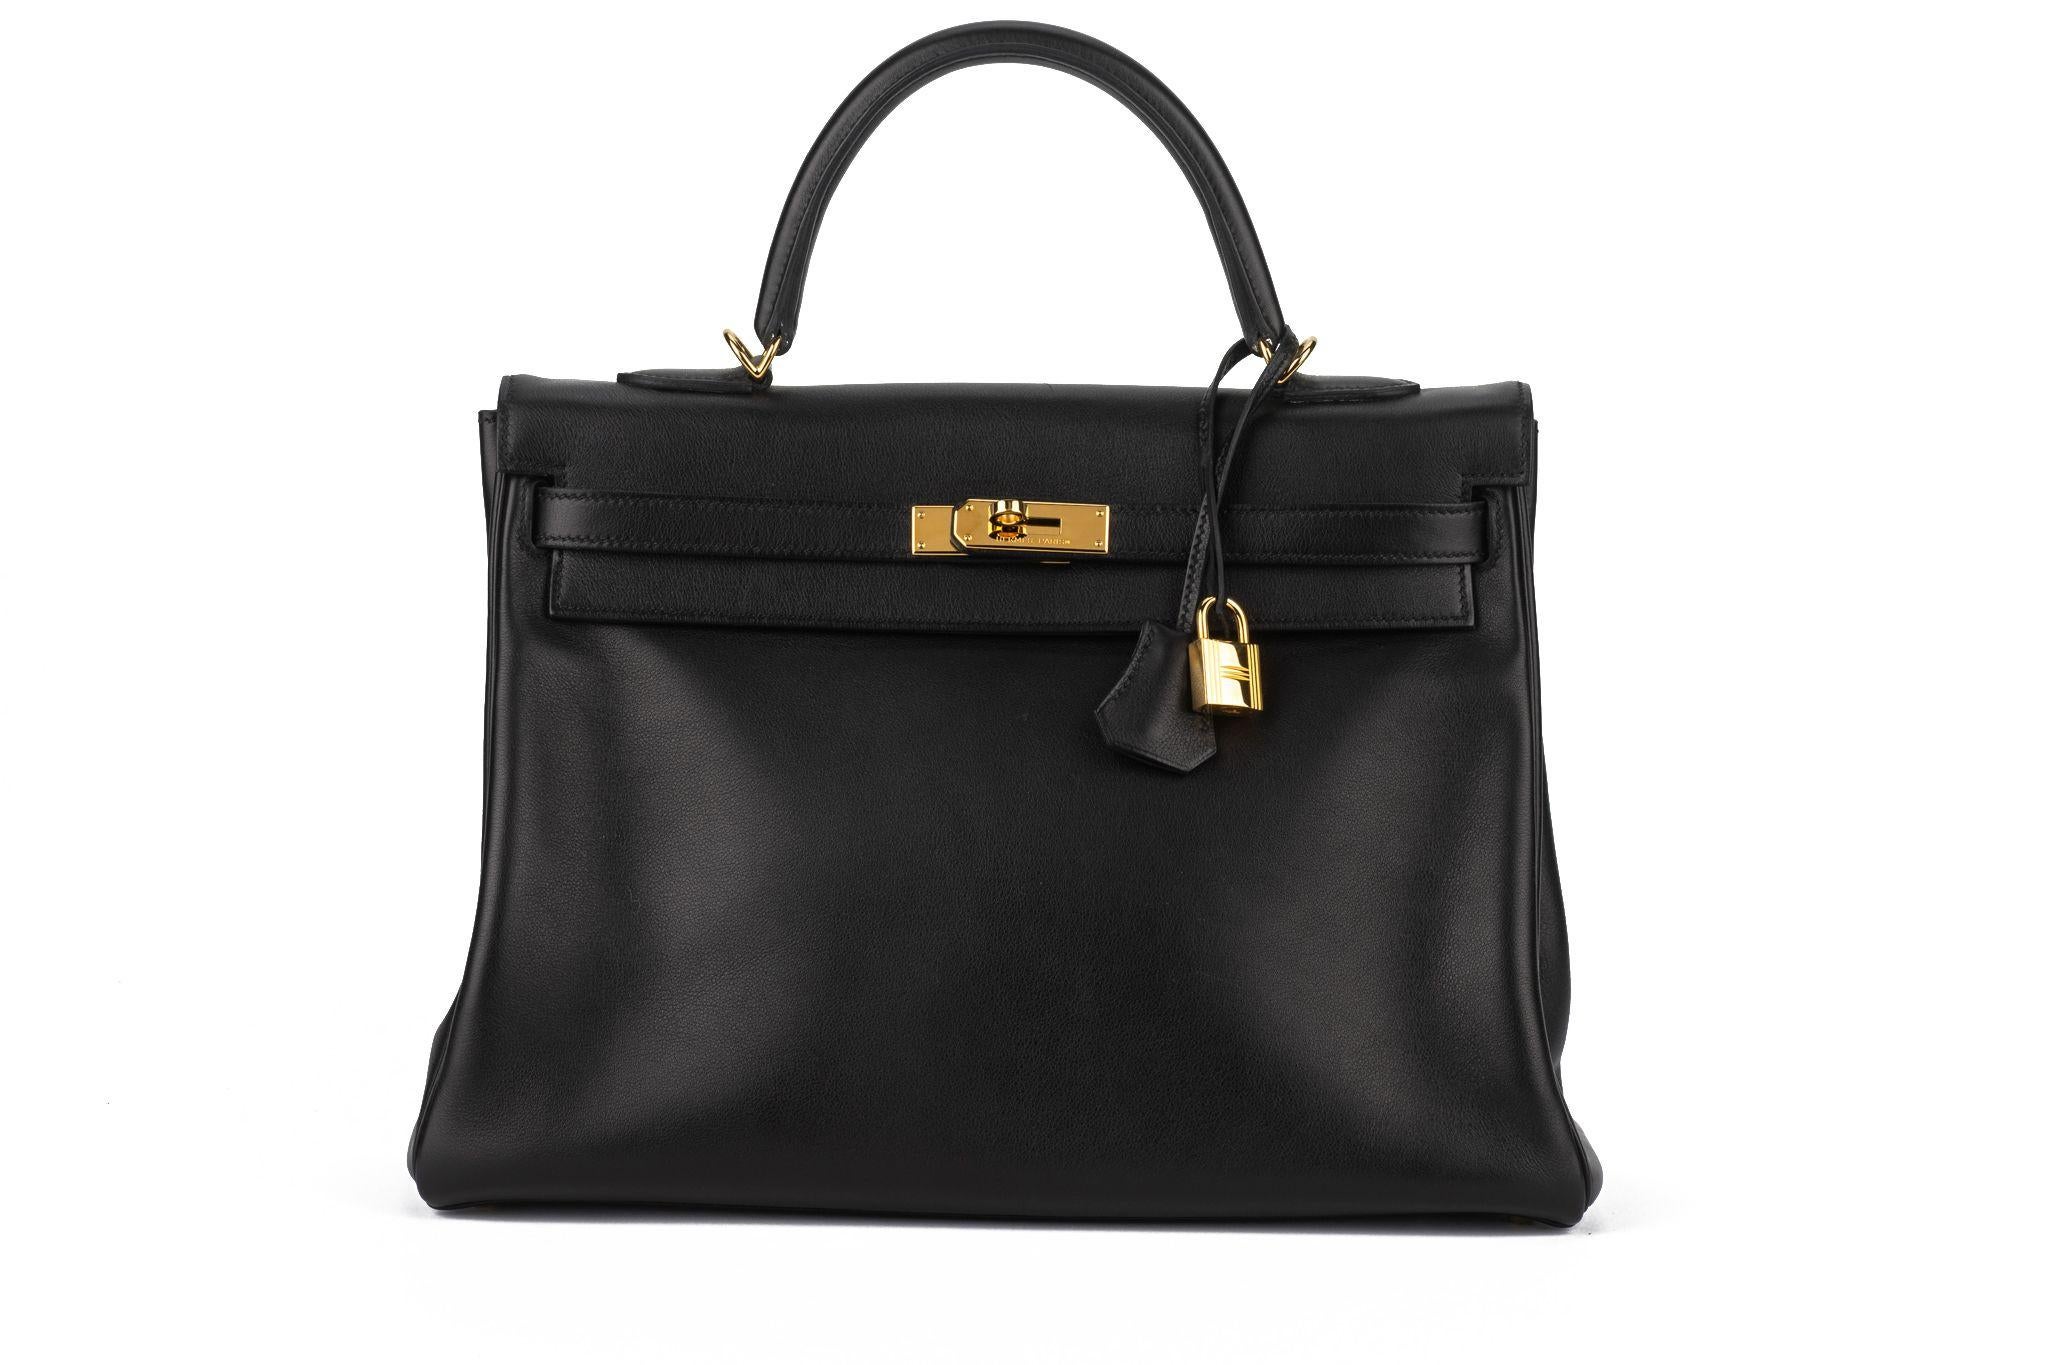 Hermès 35cm Kelly Retourne bag in black swift leather and gold tone hardware. Handle drop, 3.5